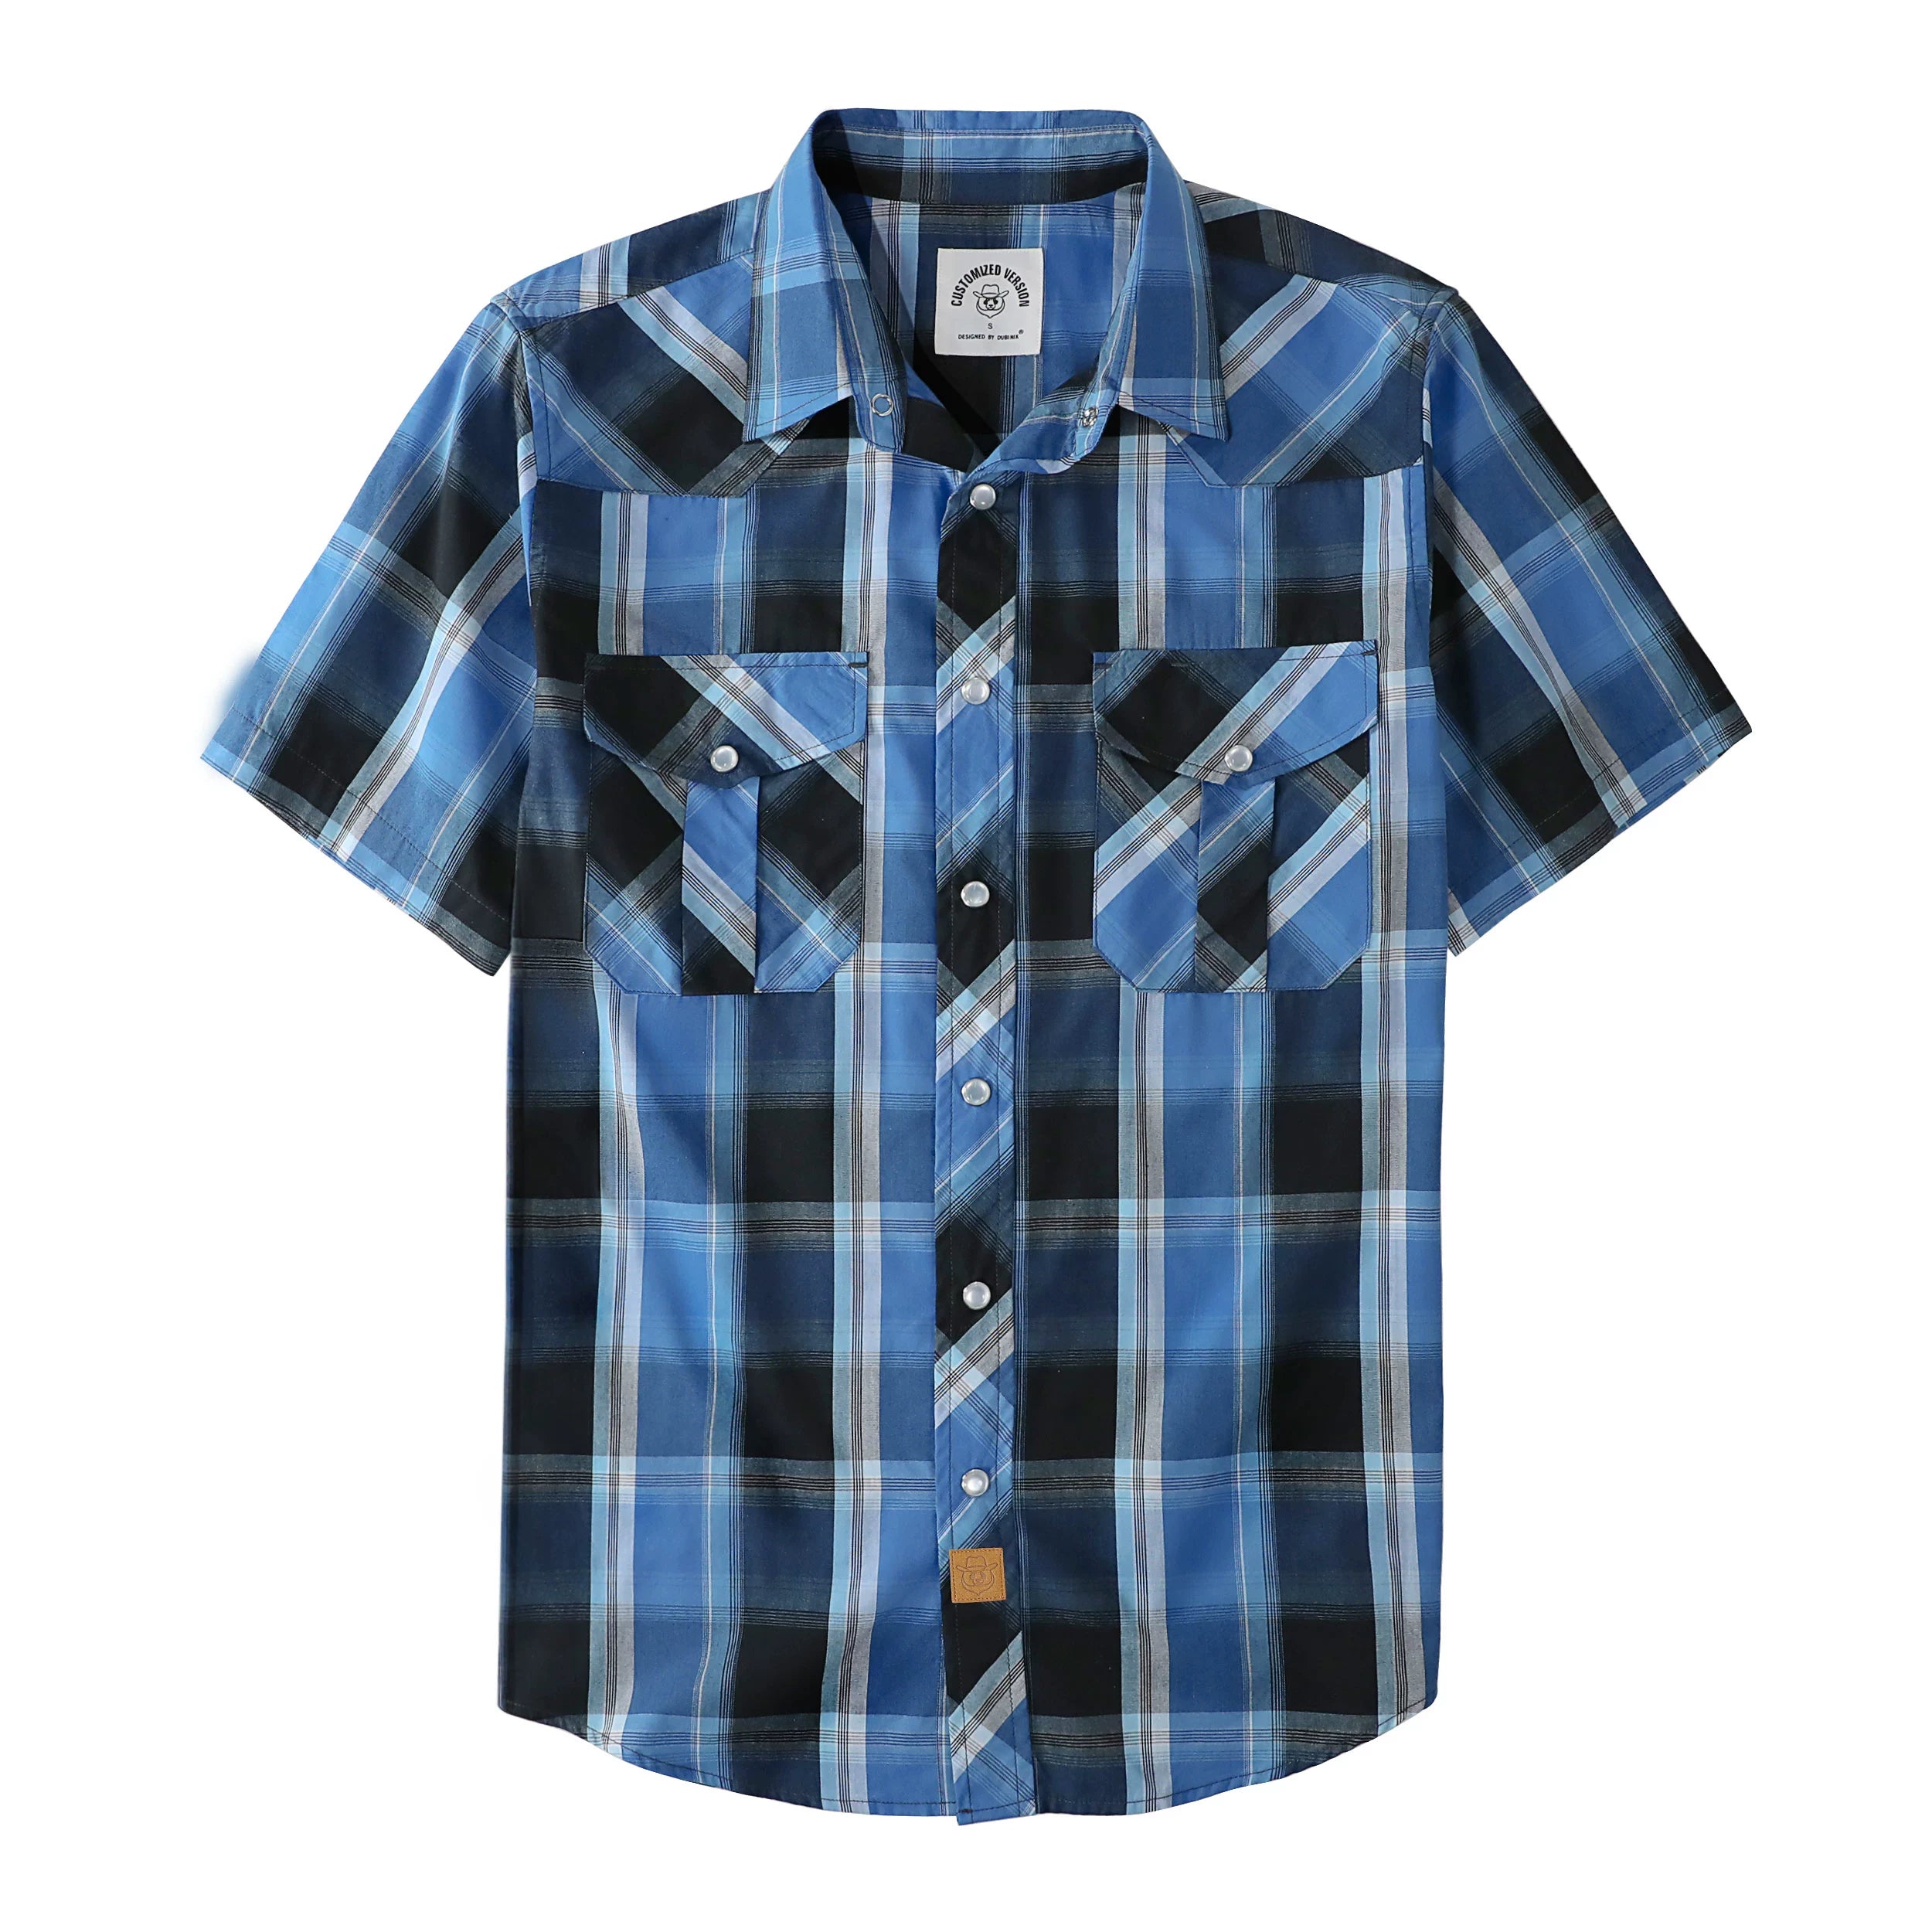 Dubinik® Western Shirts for Men Short Sleeve Plaid Pearl Snap Shirts for Men Button Up Shirt Cowboy Casual Work Shirt#41019